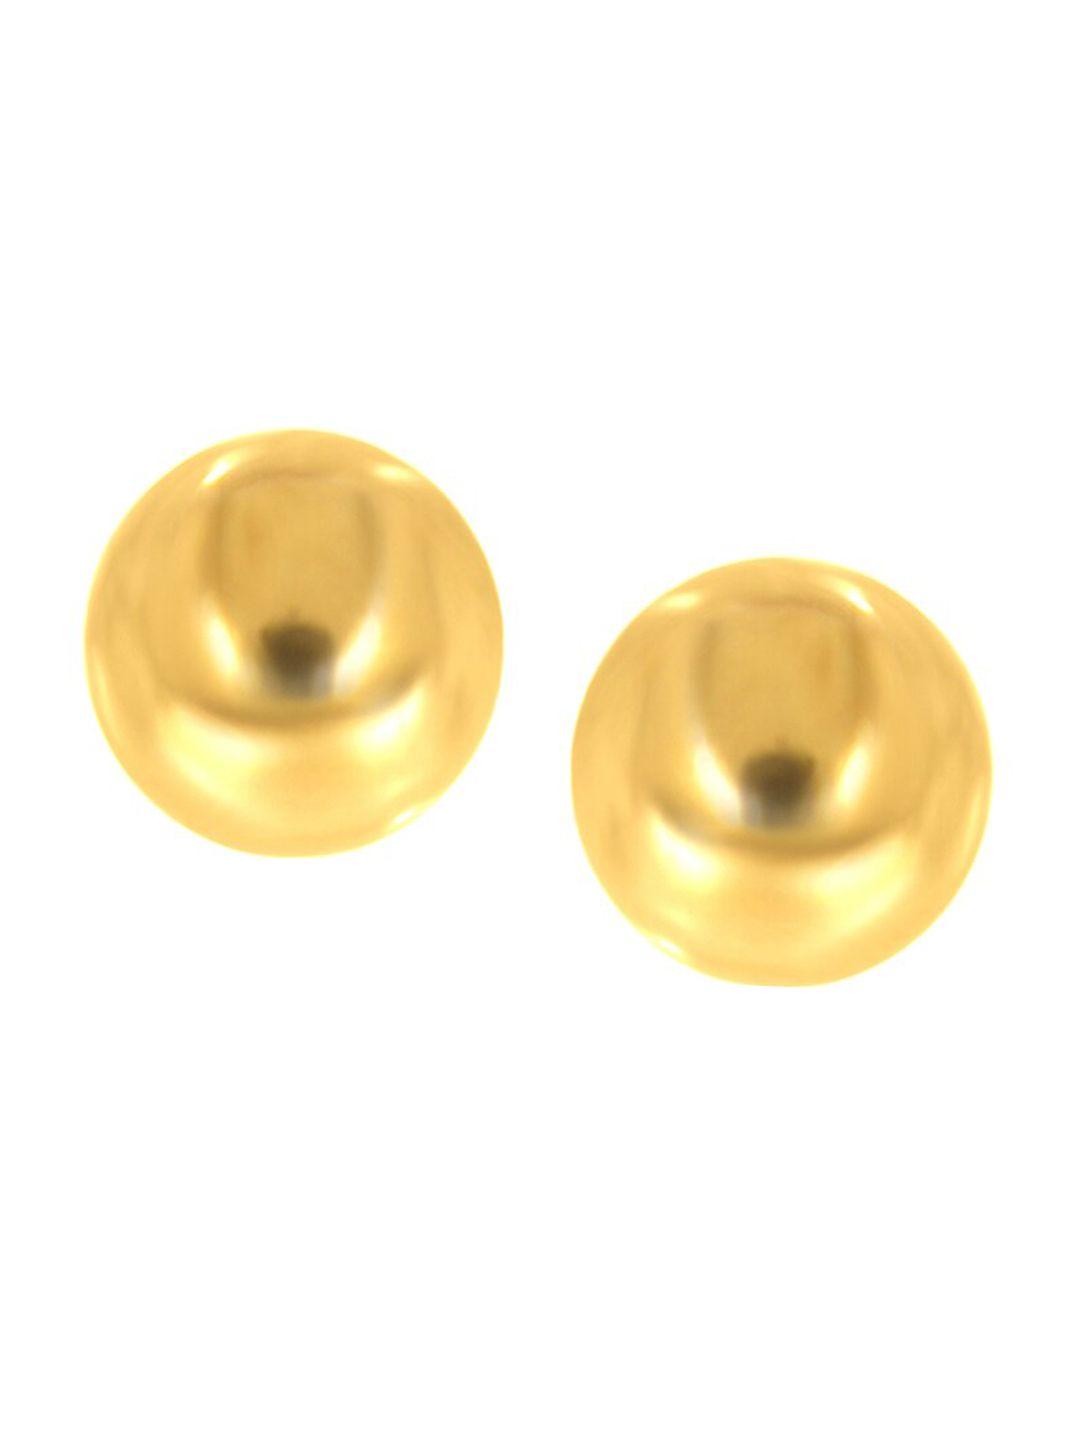 senco-radiance-of-charisma-22kt-gold-stud-earrings-0.64gm